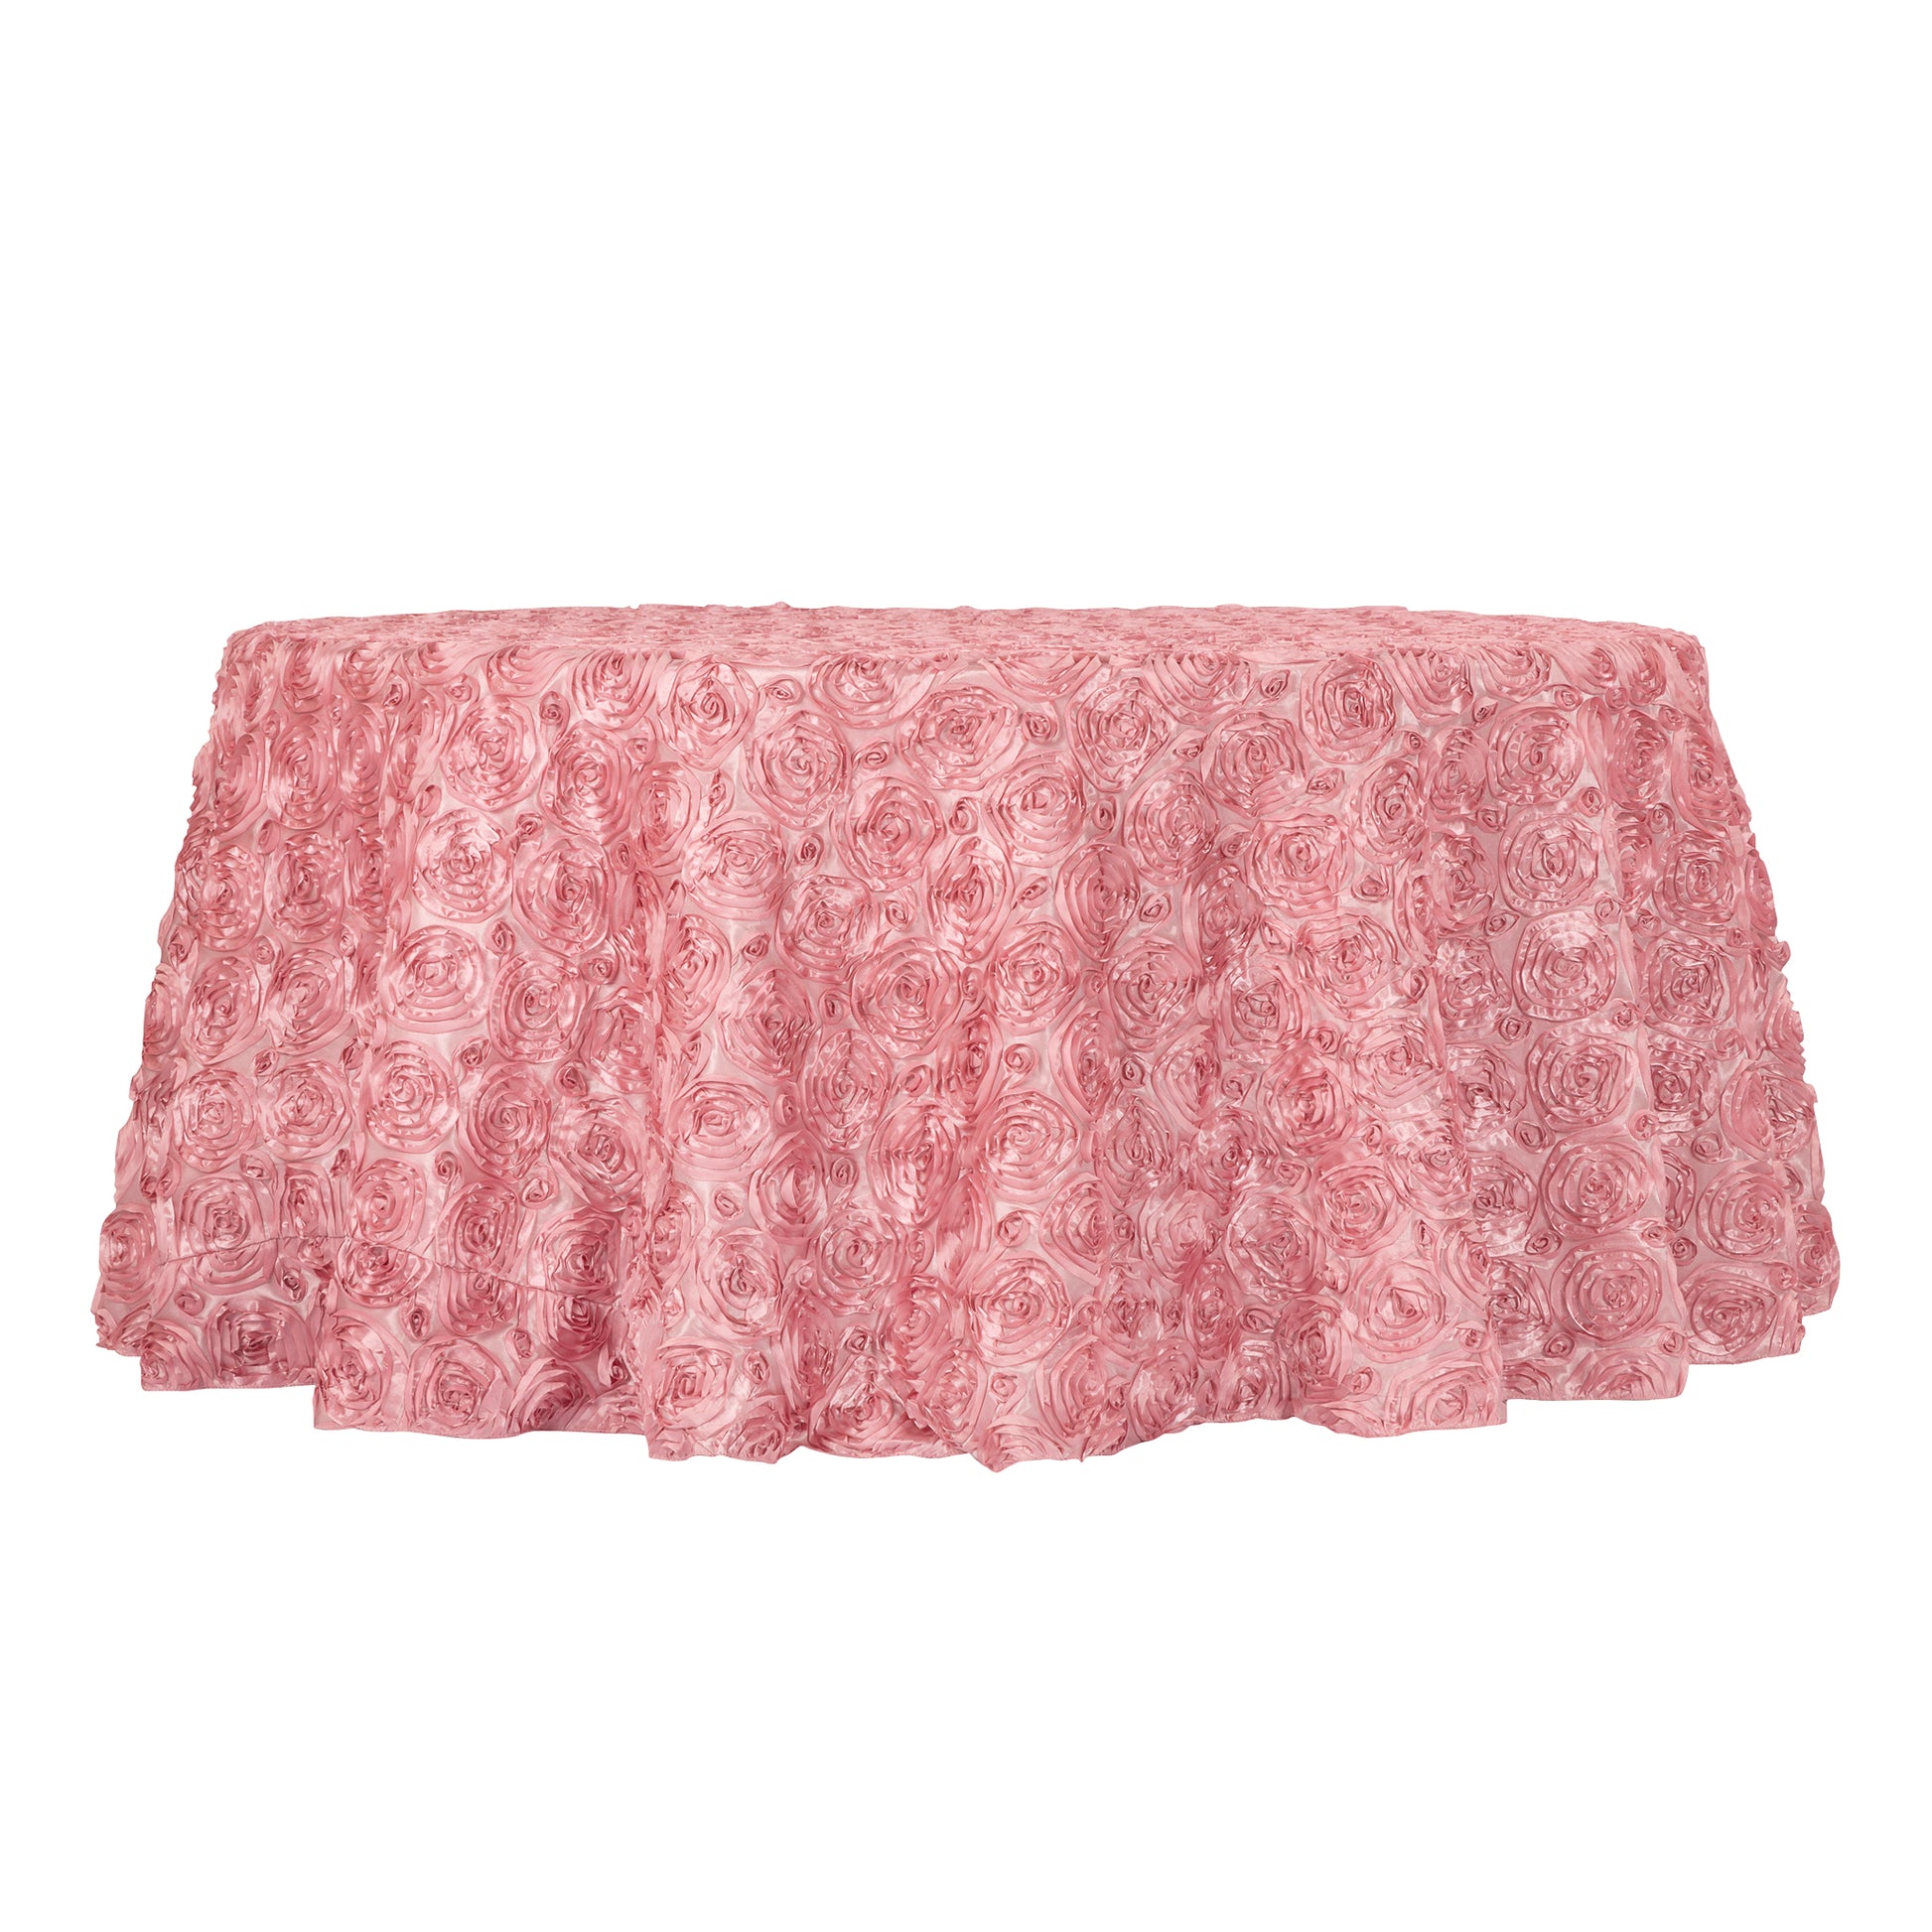 Wedding Rosette SATIN 120" Round Tablecloth - Dusty Rose/Mauve - CV Linens